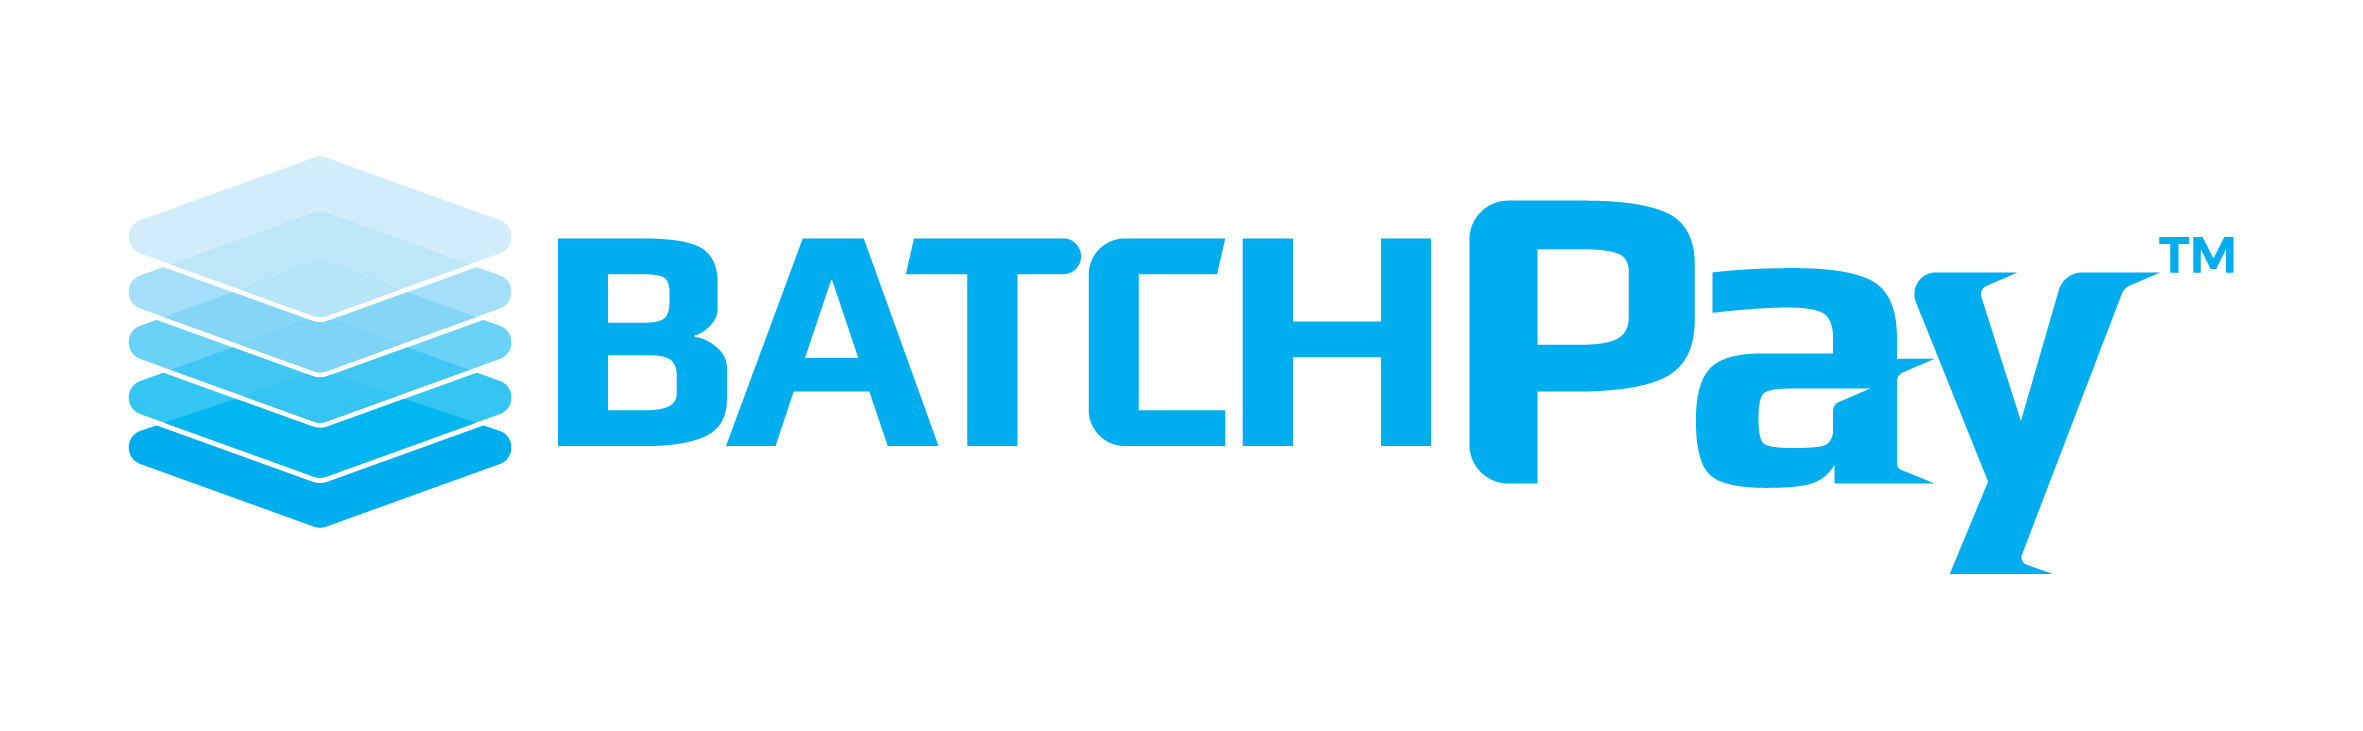 BatchPay logo